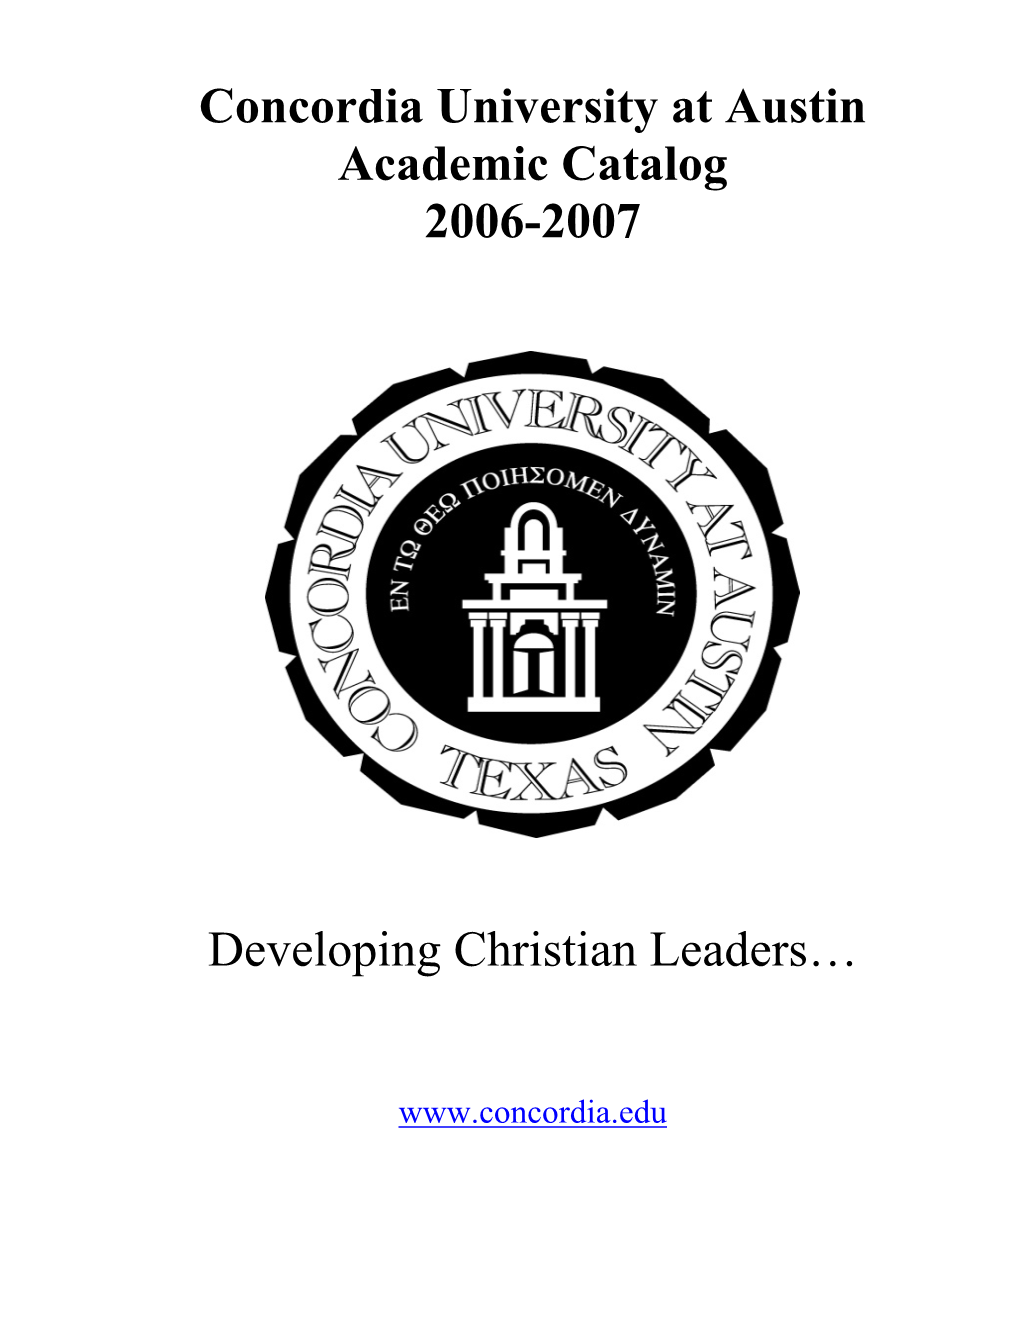 Concordia University at Austin Academic Catalog 2006-2007